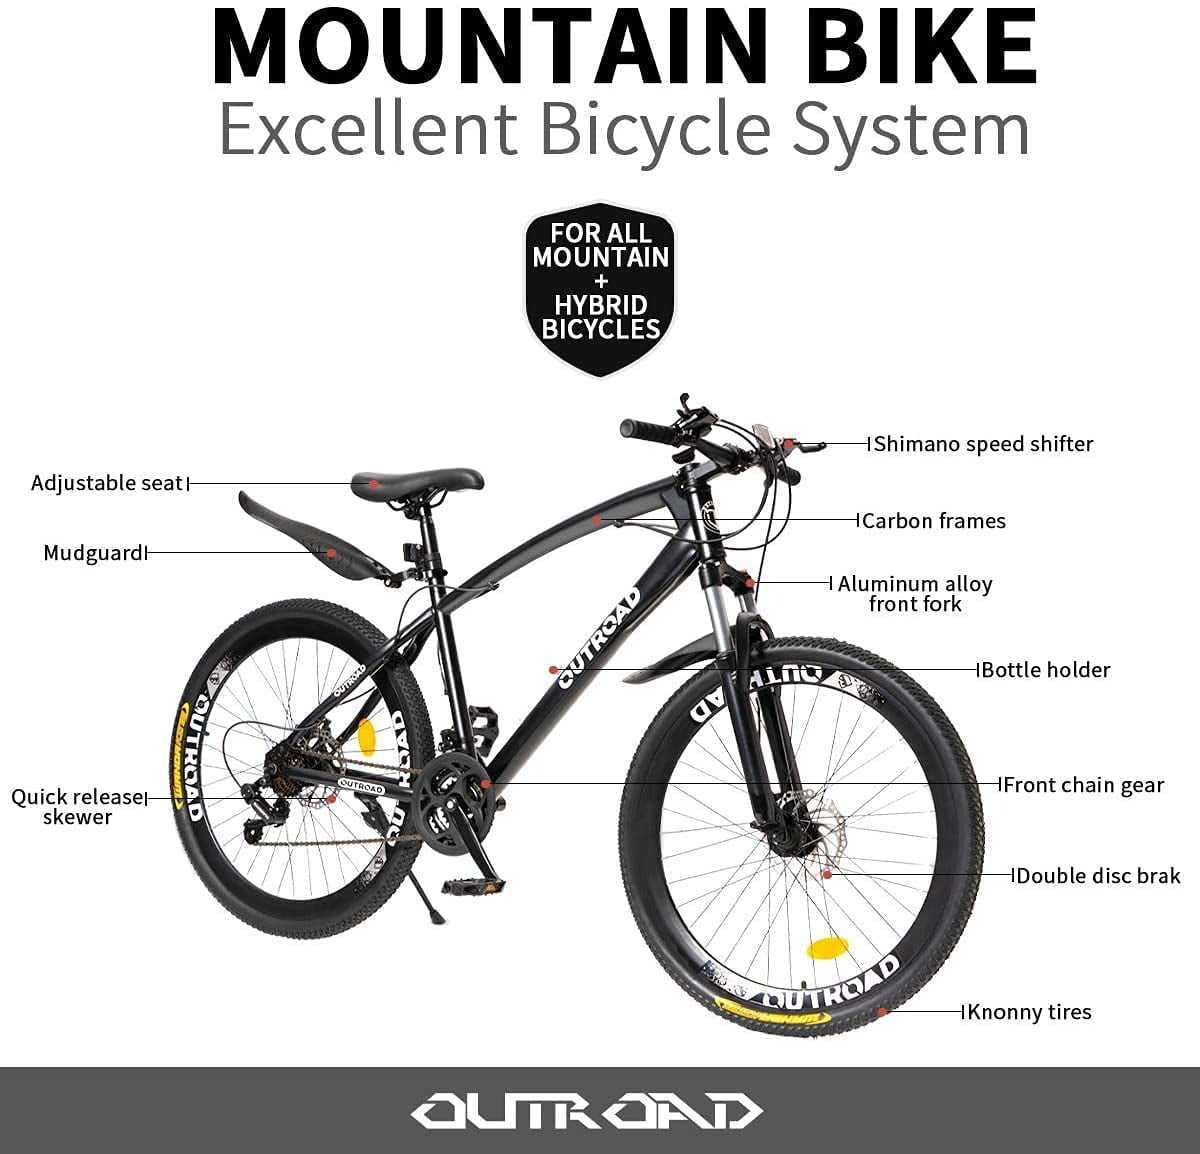 Mountain Bike Wheel Front 26 inch For Disc Brake Aluminium Free Rim Tape Black 